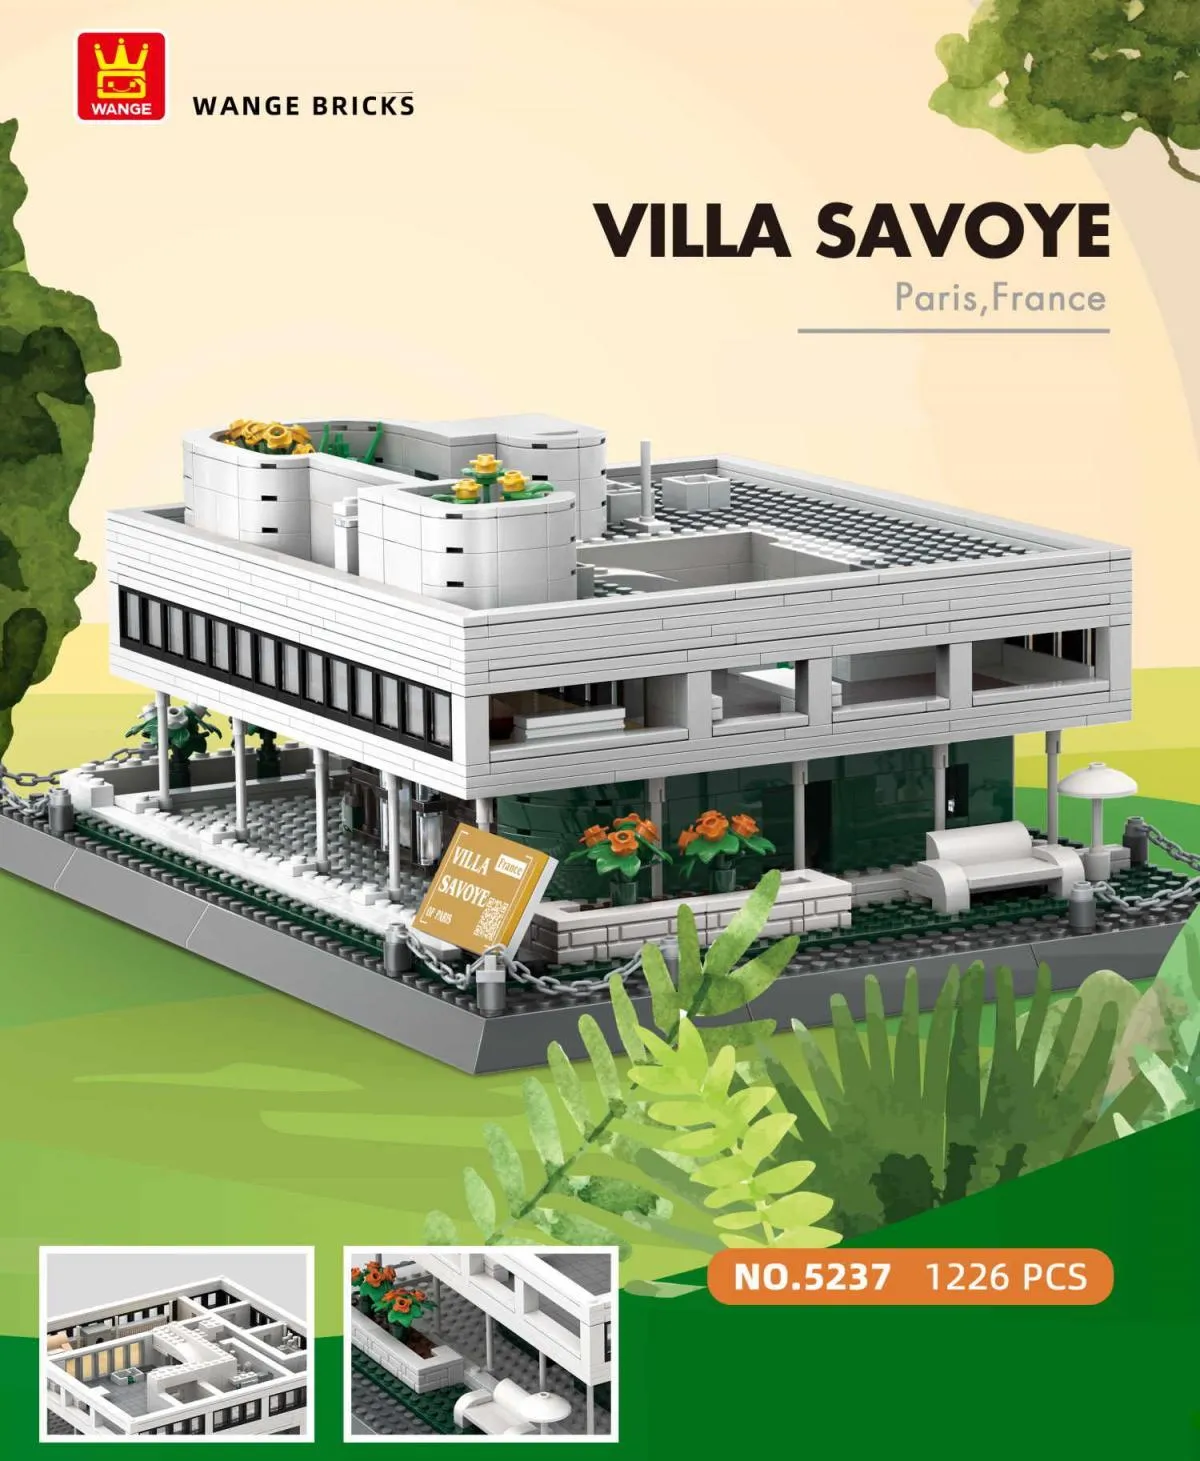 Wange - Villa Savoye, Paris France | Set 5237